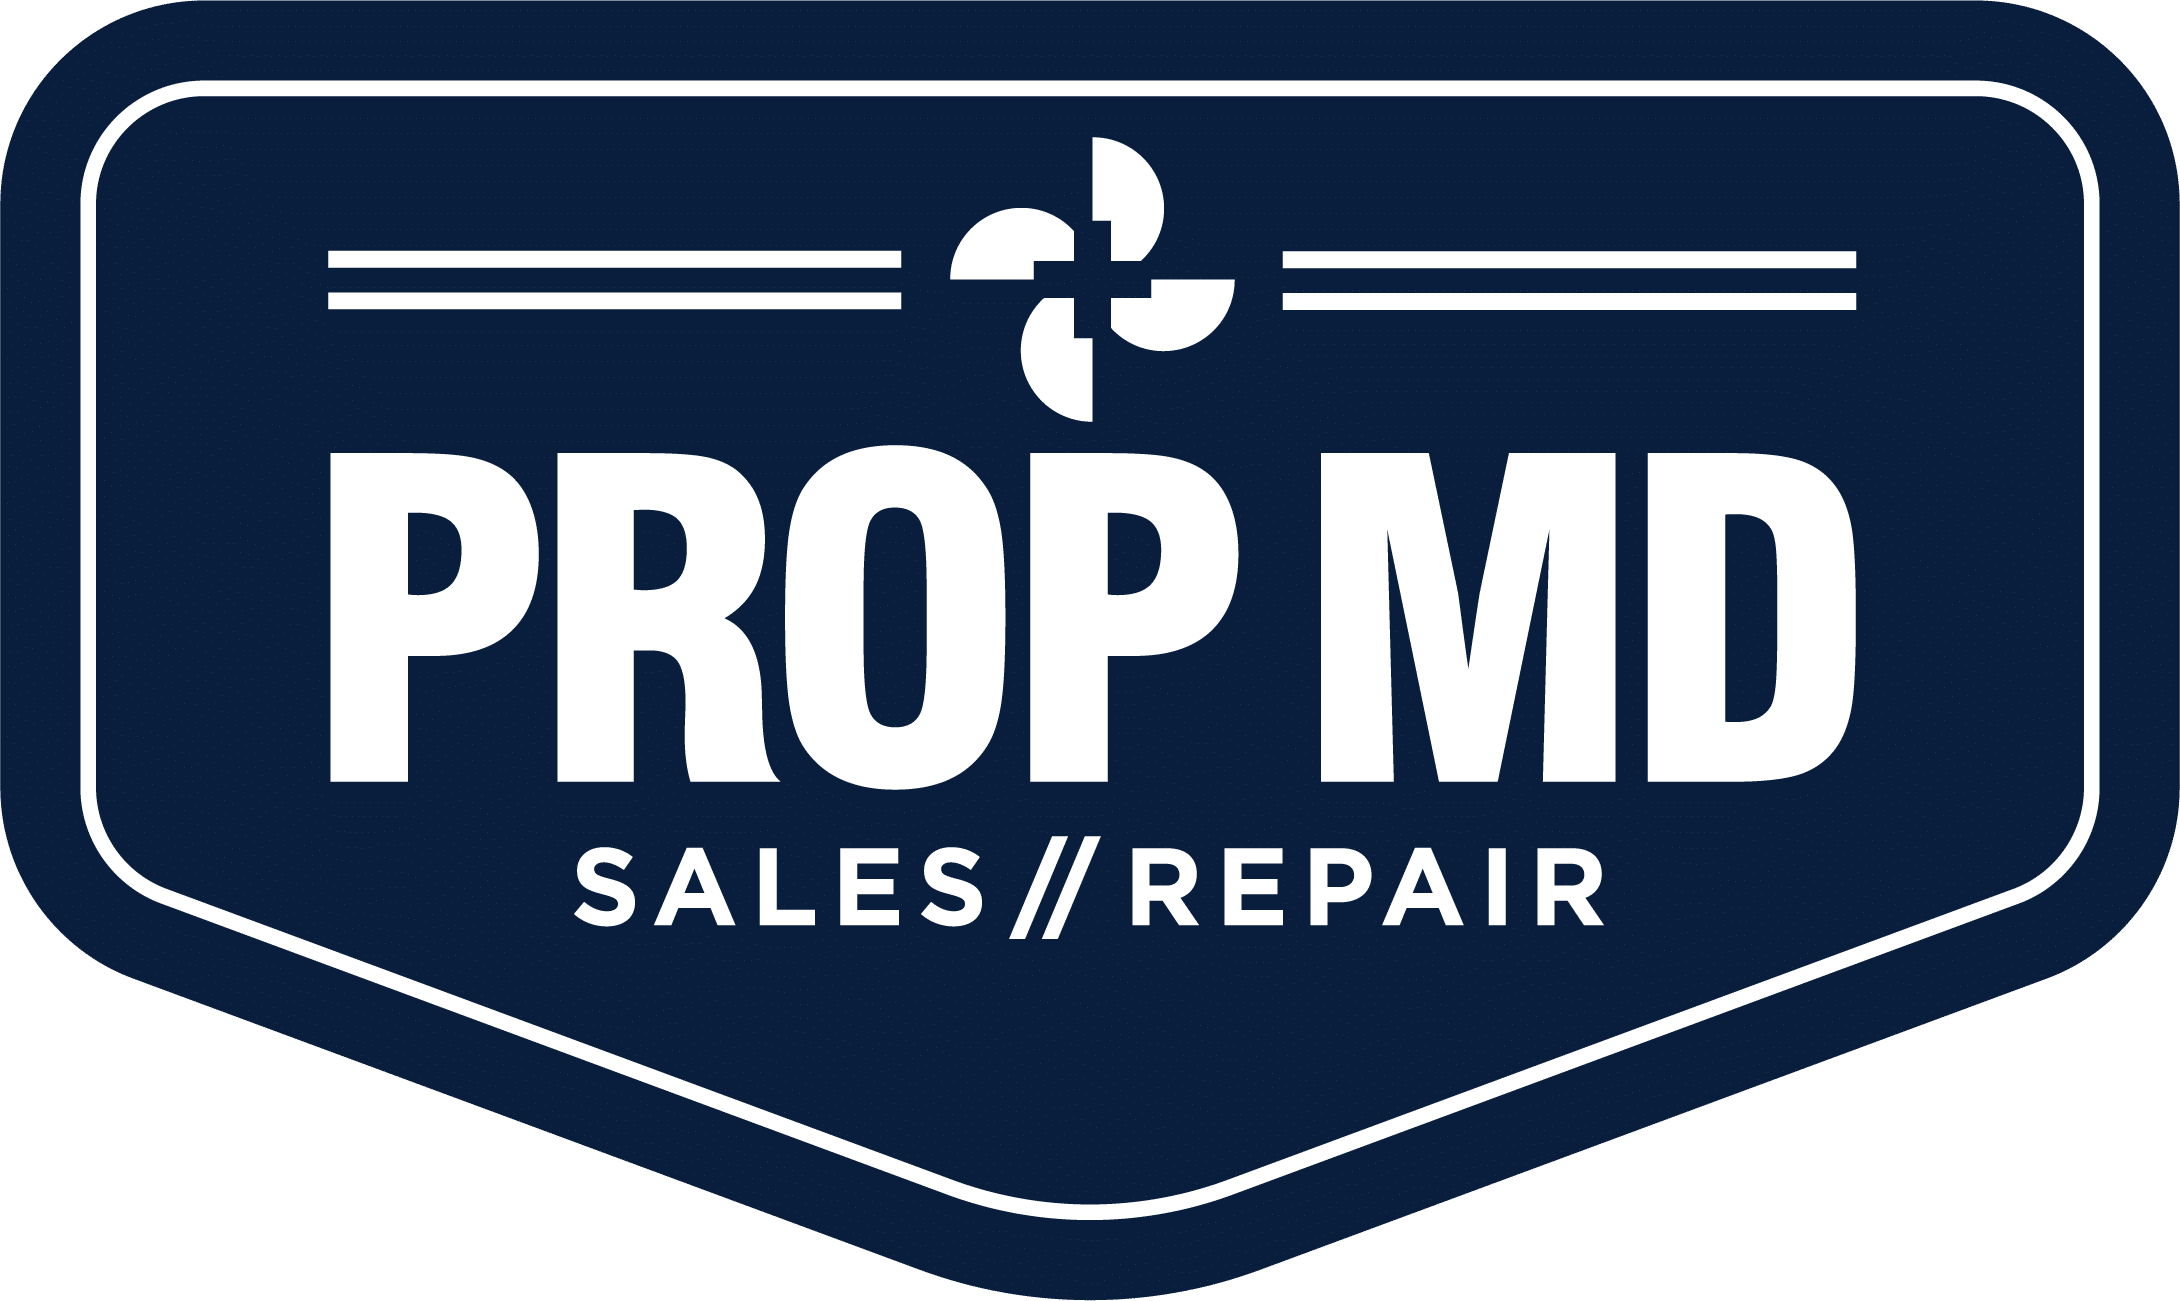 PropMD Logo